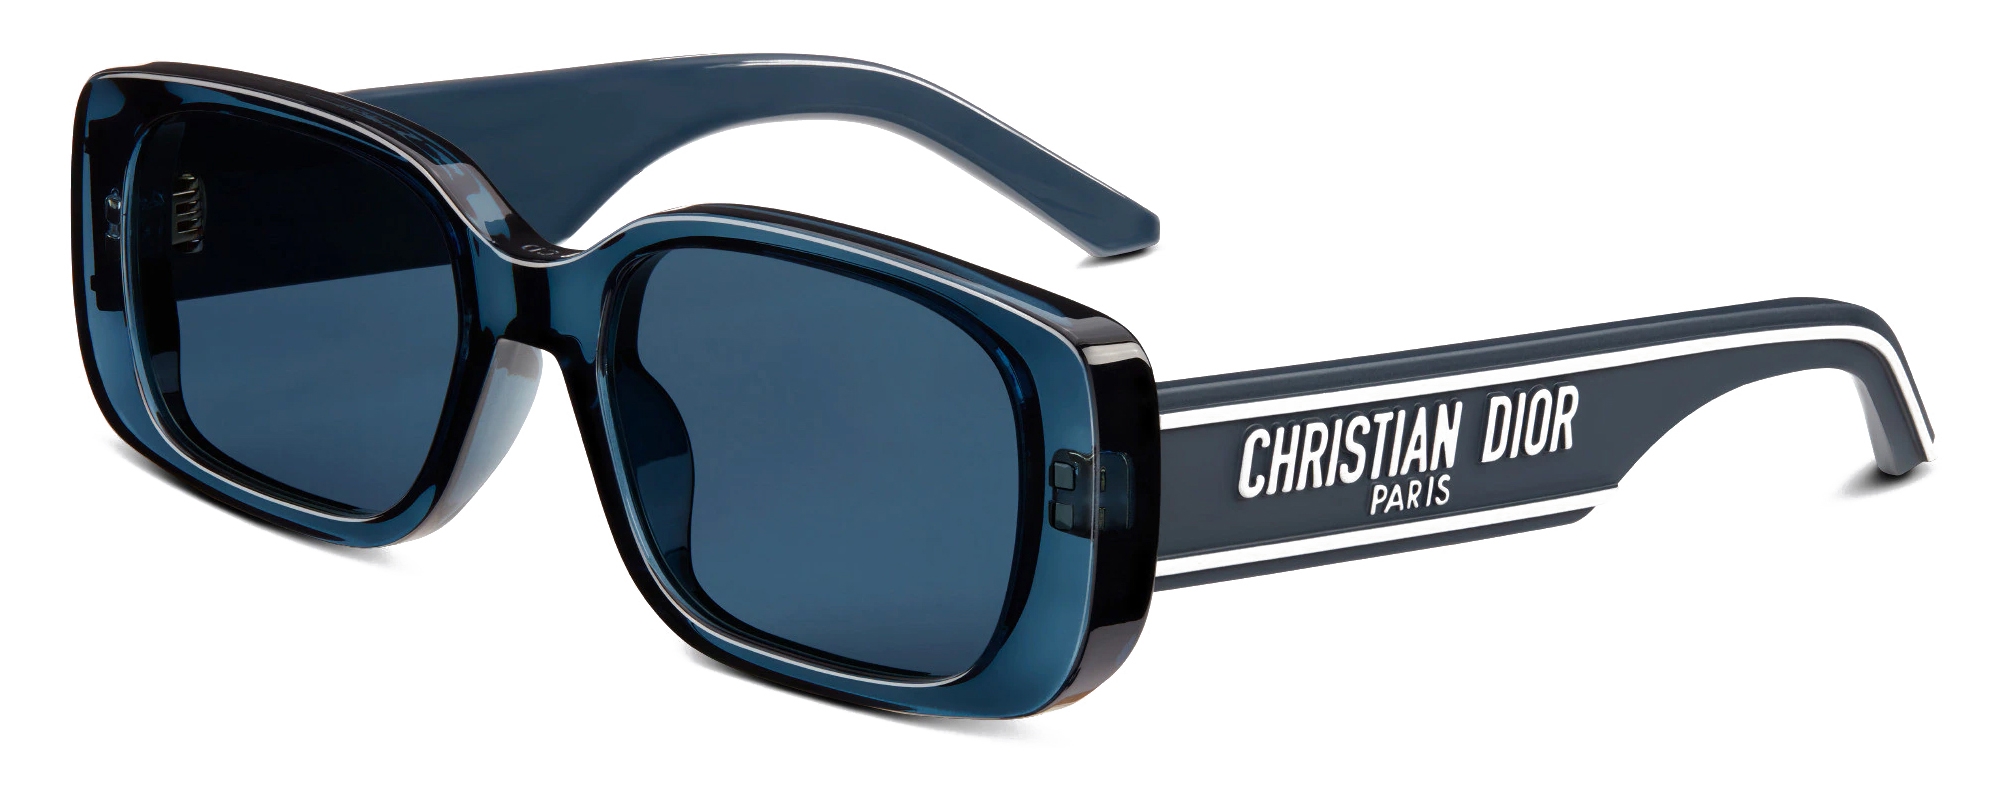 DIOR Eyewear  Wildior S2u RectangularFrame Acetate Sunglasses  Black   One Size  Net A Porter  Shopping from Microsoft Start